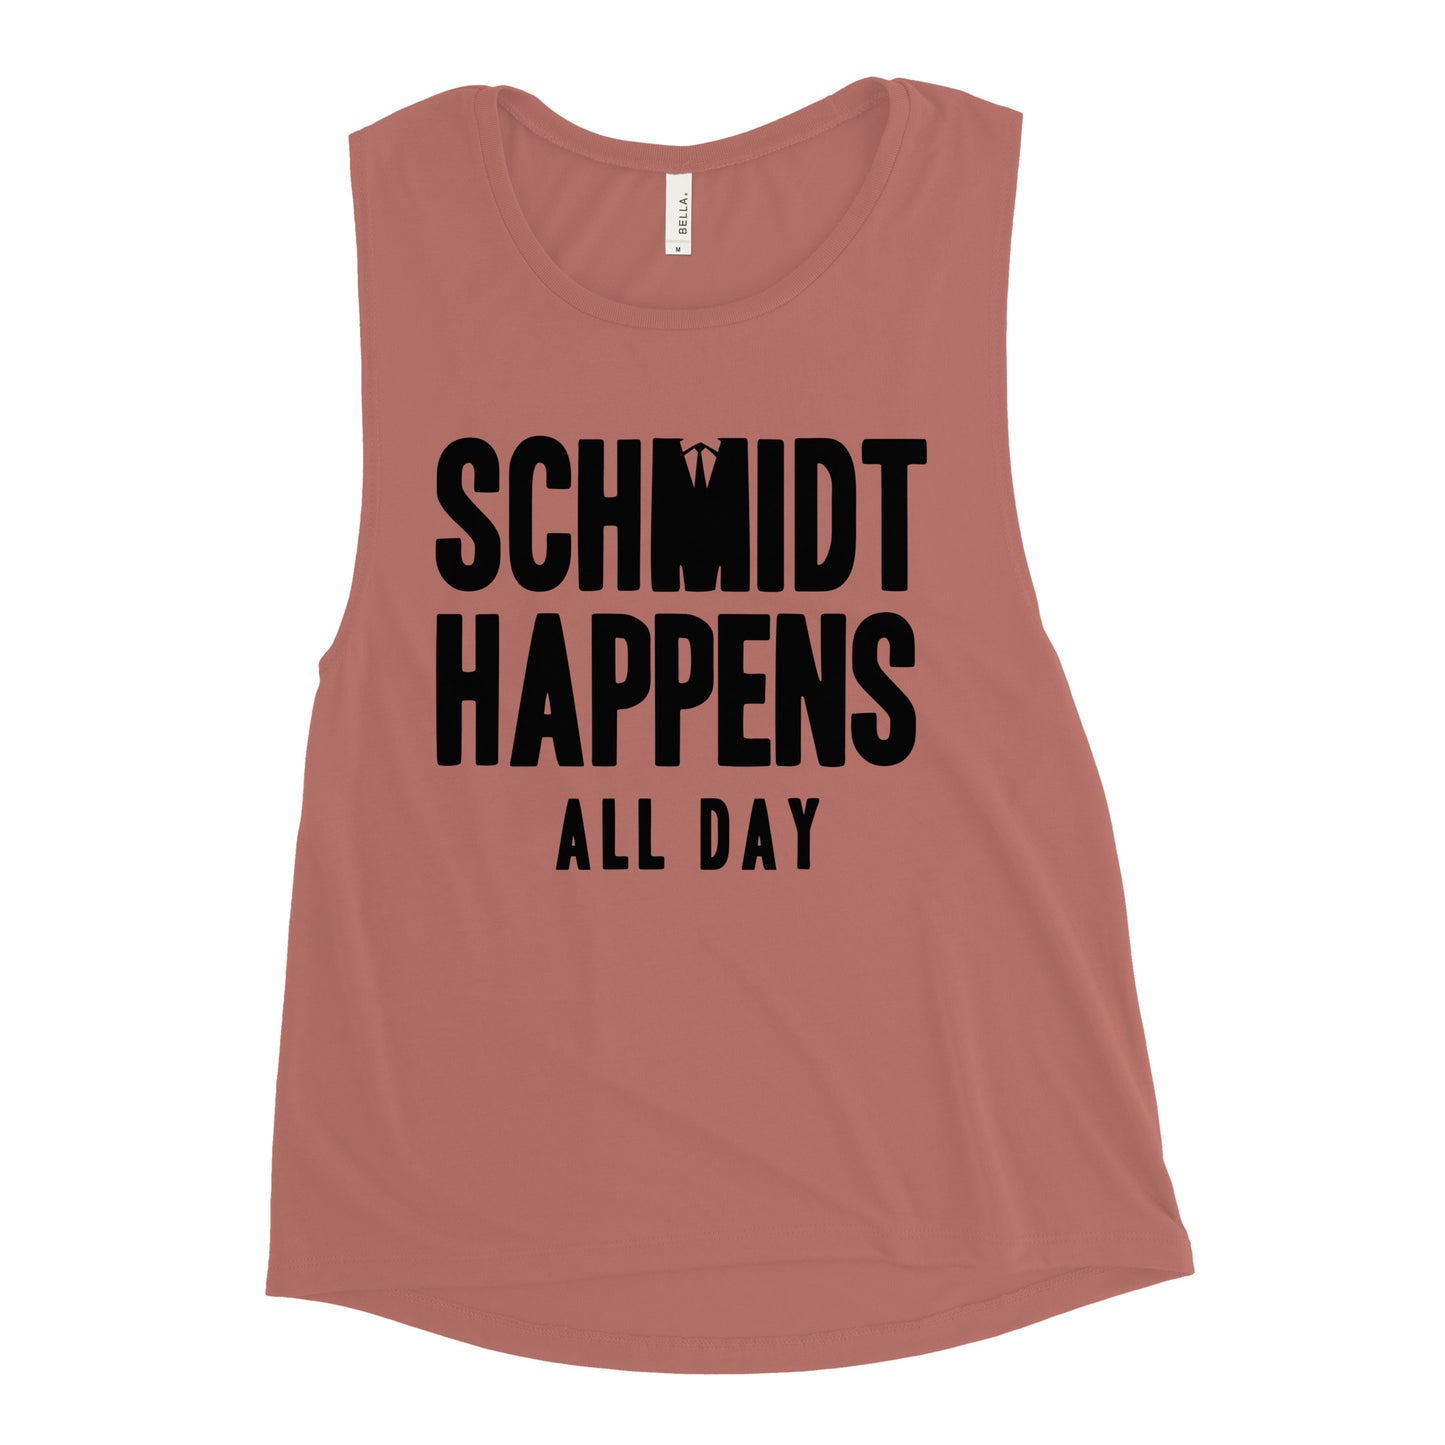 Schmidt Happens All Day Women's Muscle Tank